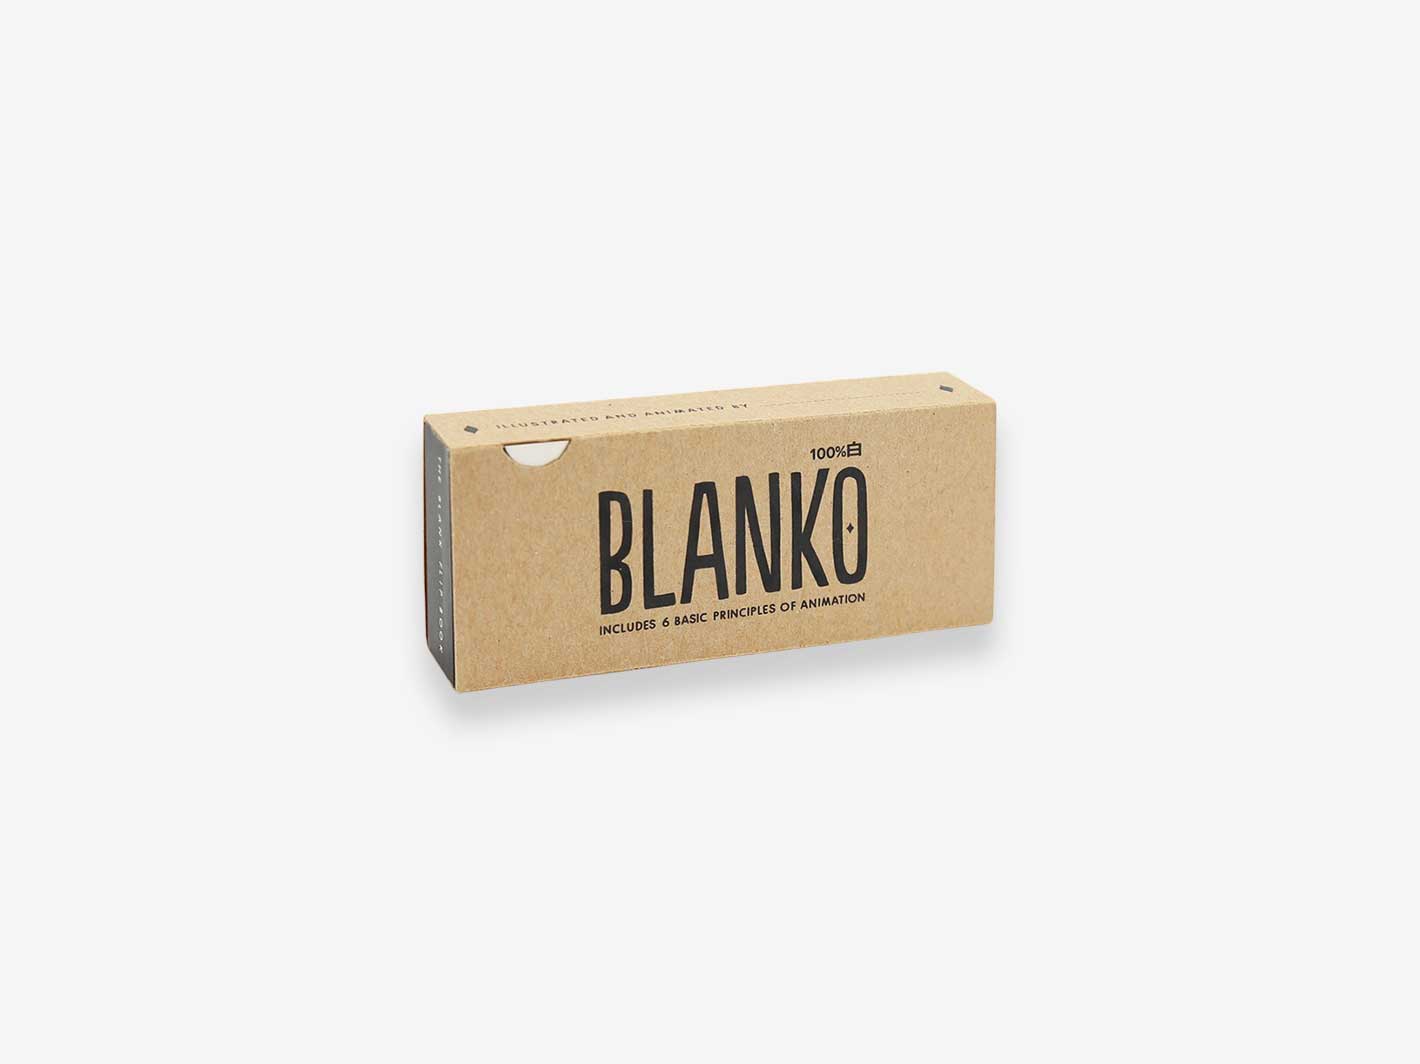 THE BLANKO FLIPBOOK – Academy Museum Store